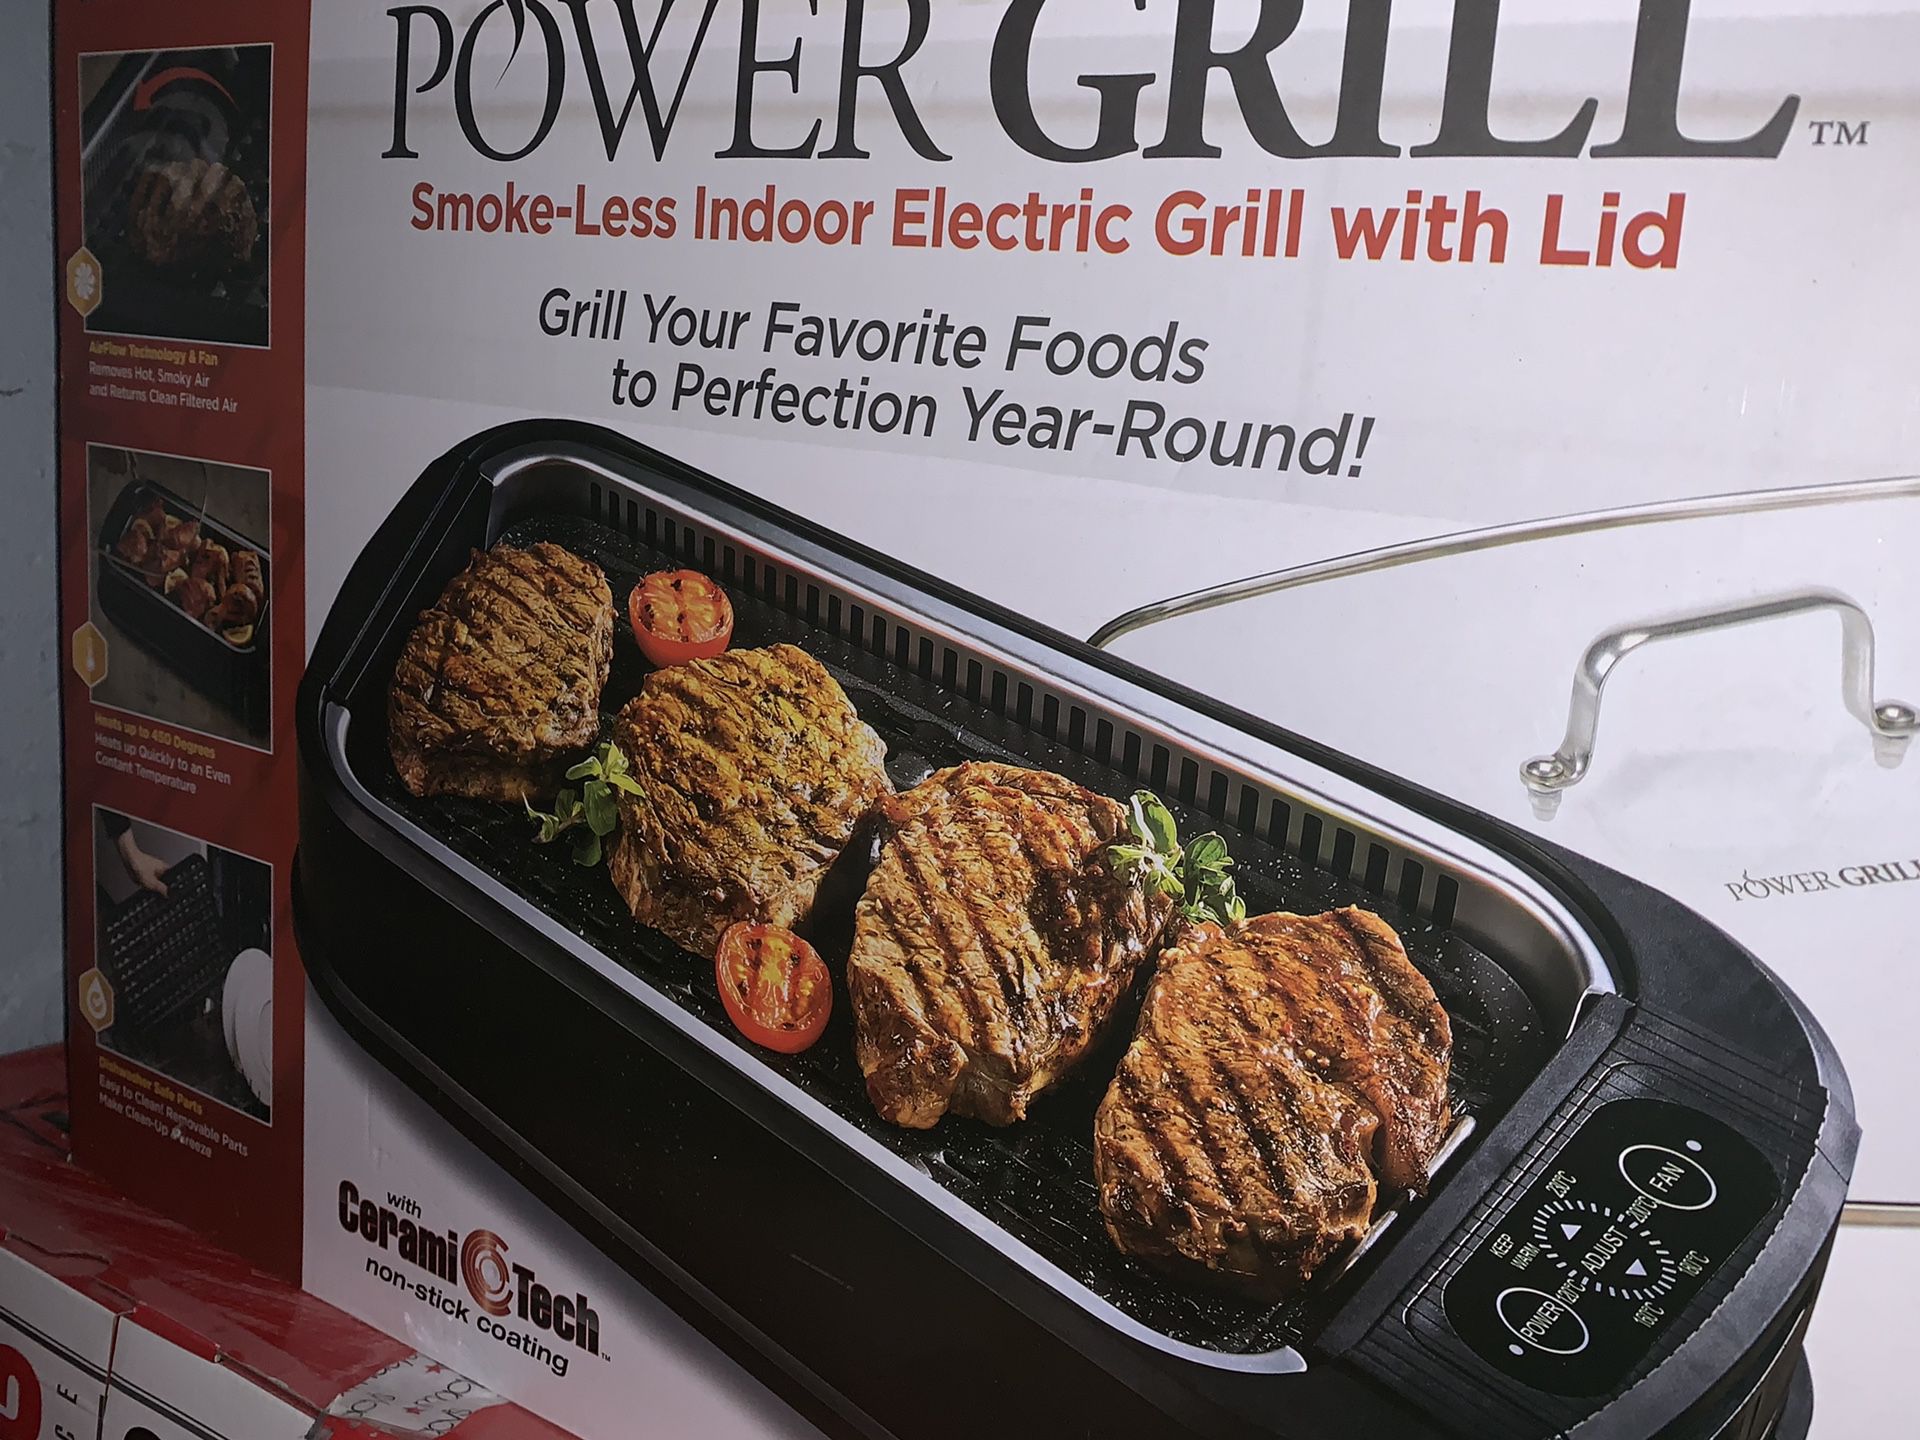 Power grill smoke-less